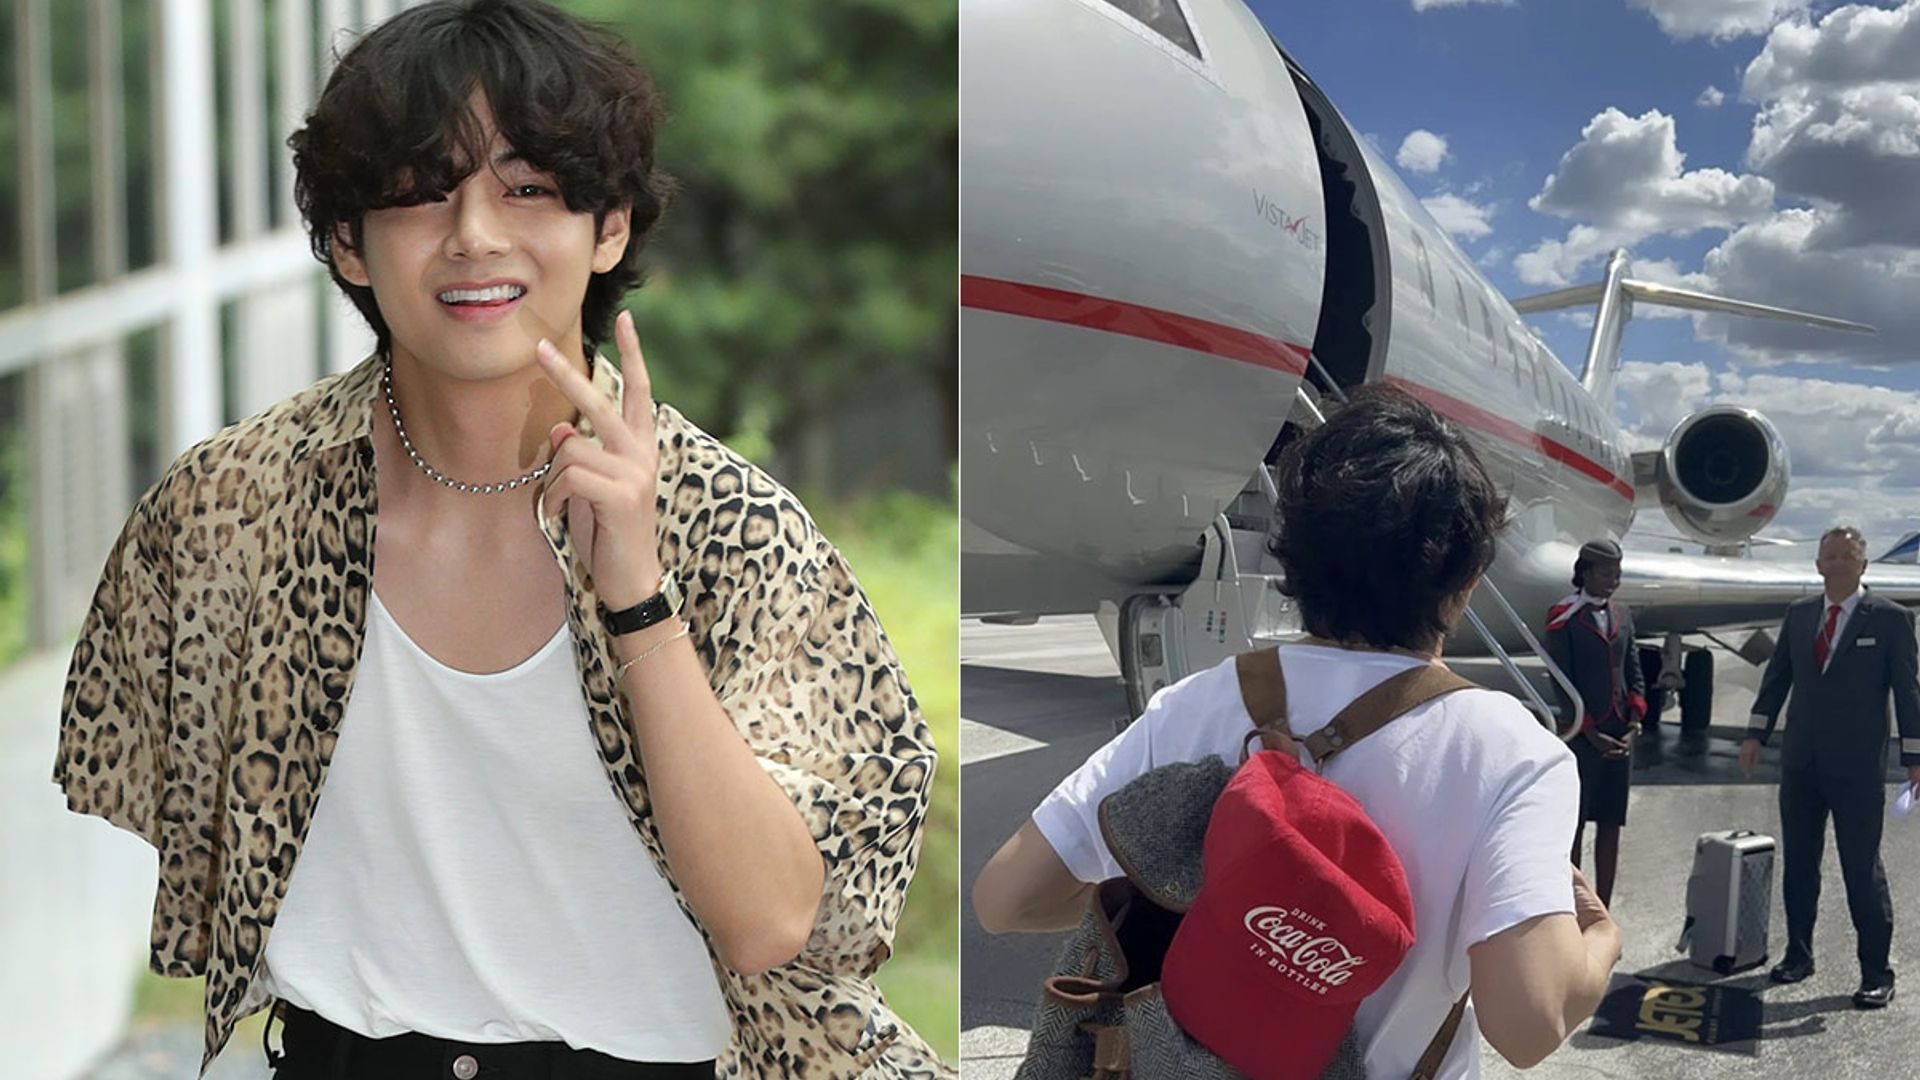 BTS singer V shares jaw-dropping peek inside $62 million private jet